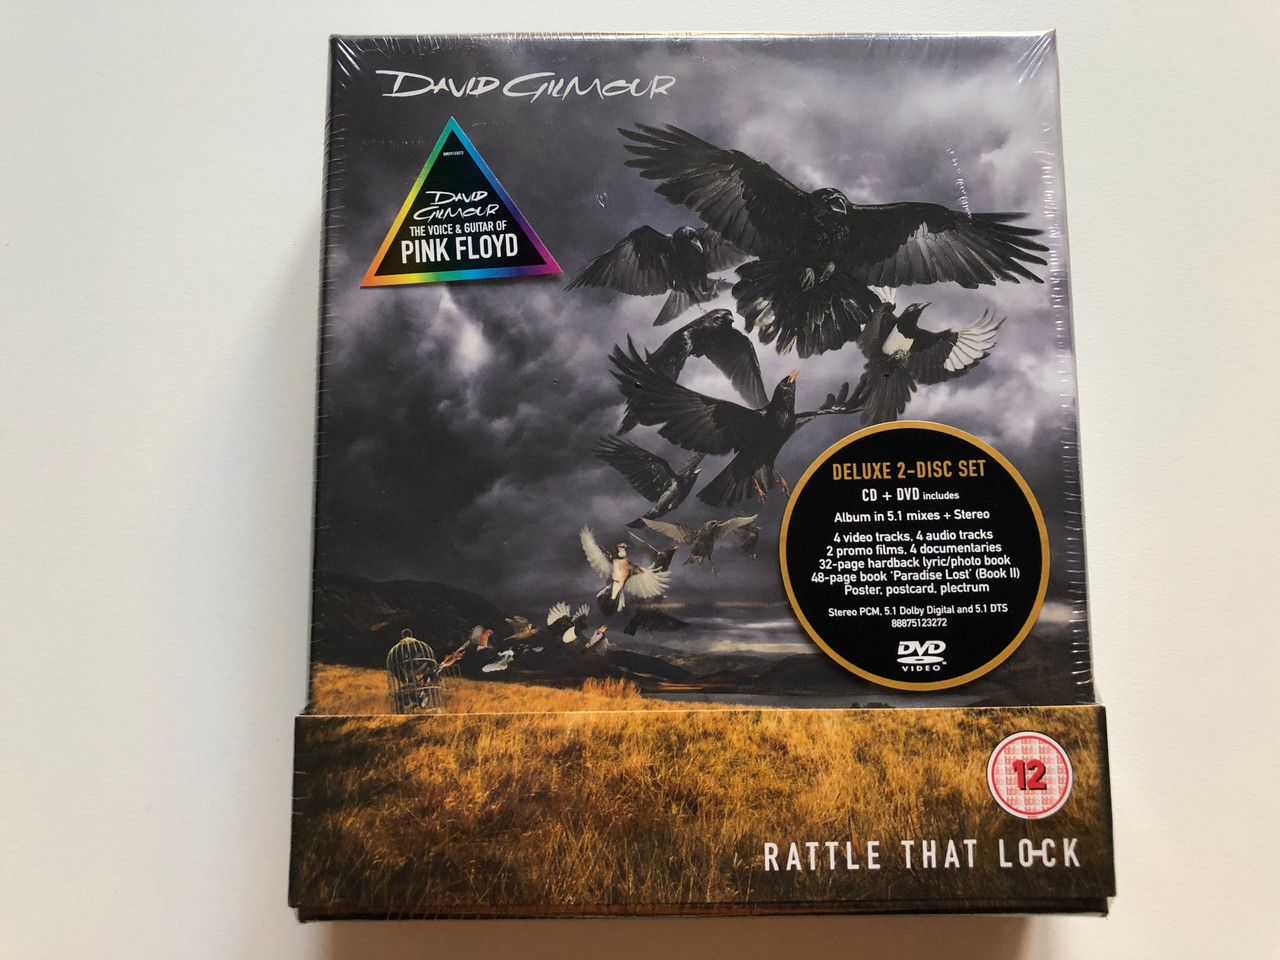 David Gilmour – Rattle That Lock / Deluxe 2-Disc Set - CD + DVD Includes  Album in 5.1 mixes + Stereo / 4 video tracks, 4 audio tracks, 2 promo  films, 4 documentaries / Columbia Audio CD + DVD Video 2015, Box Set /  88875123272 - bibleinmylanguage